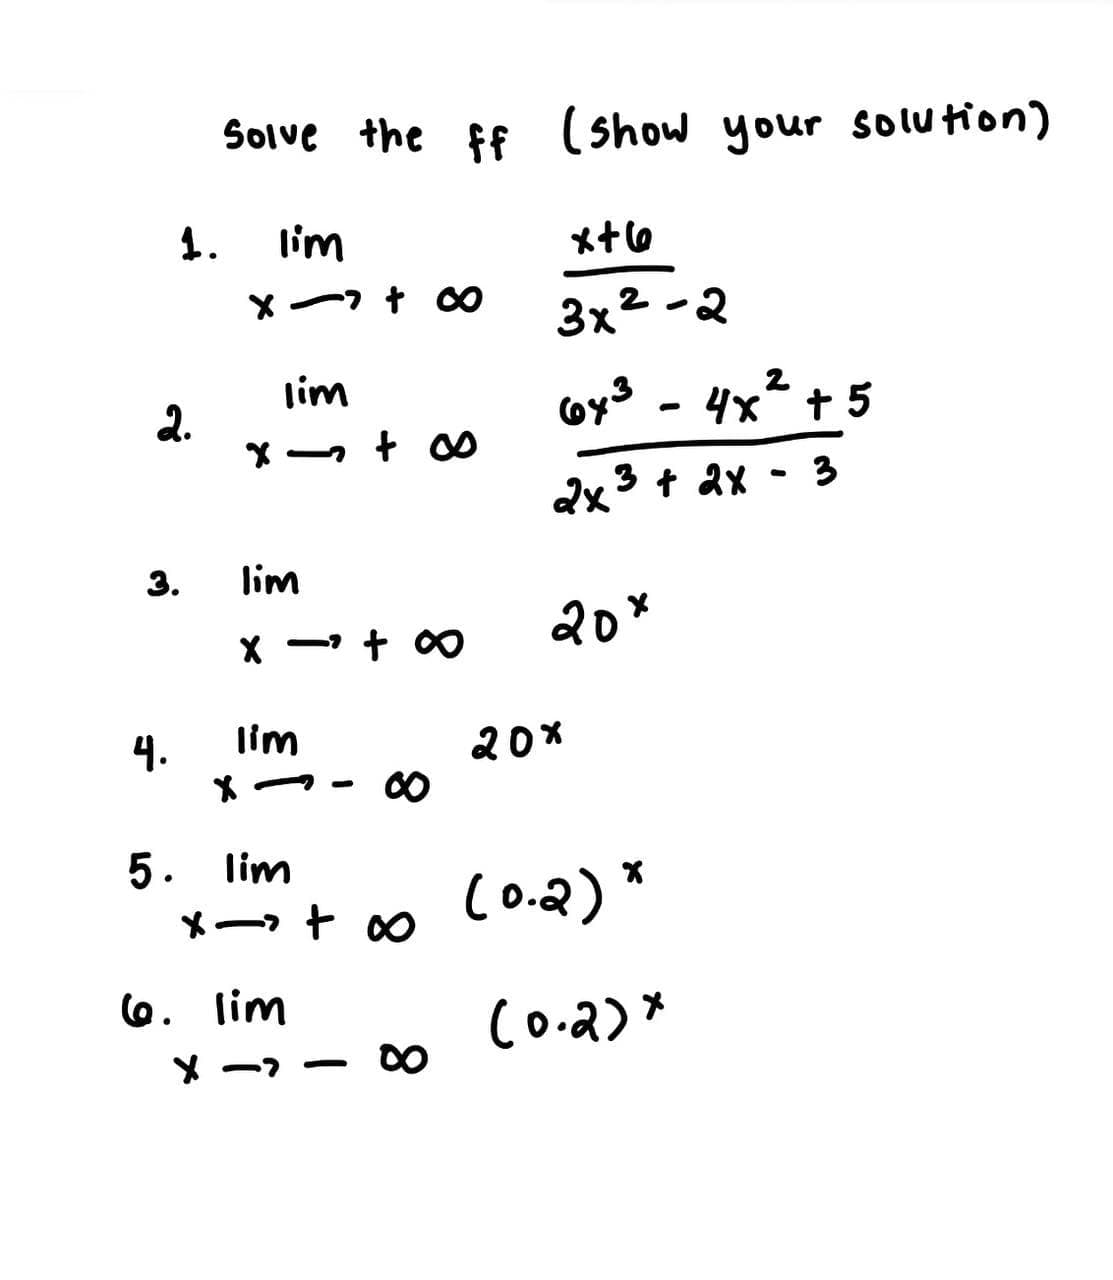 Solve the ff (show your solution)
1.
lim
3x2 -2
lim
2
2.
4x + 5
2x3 + 2x - 3
3.
lim
X -- + 00
20%
4.
lim
20%
5. lim
X- + 0
Co.2)*
6. lim
Co.2)*
D0
X -7 -
